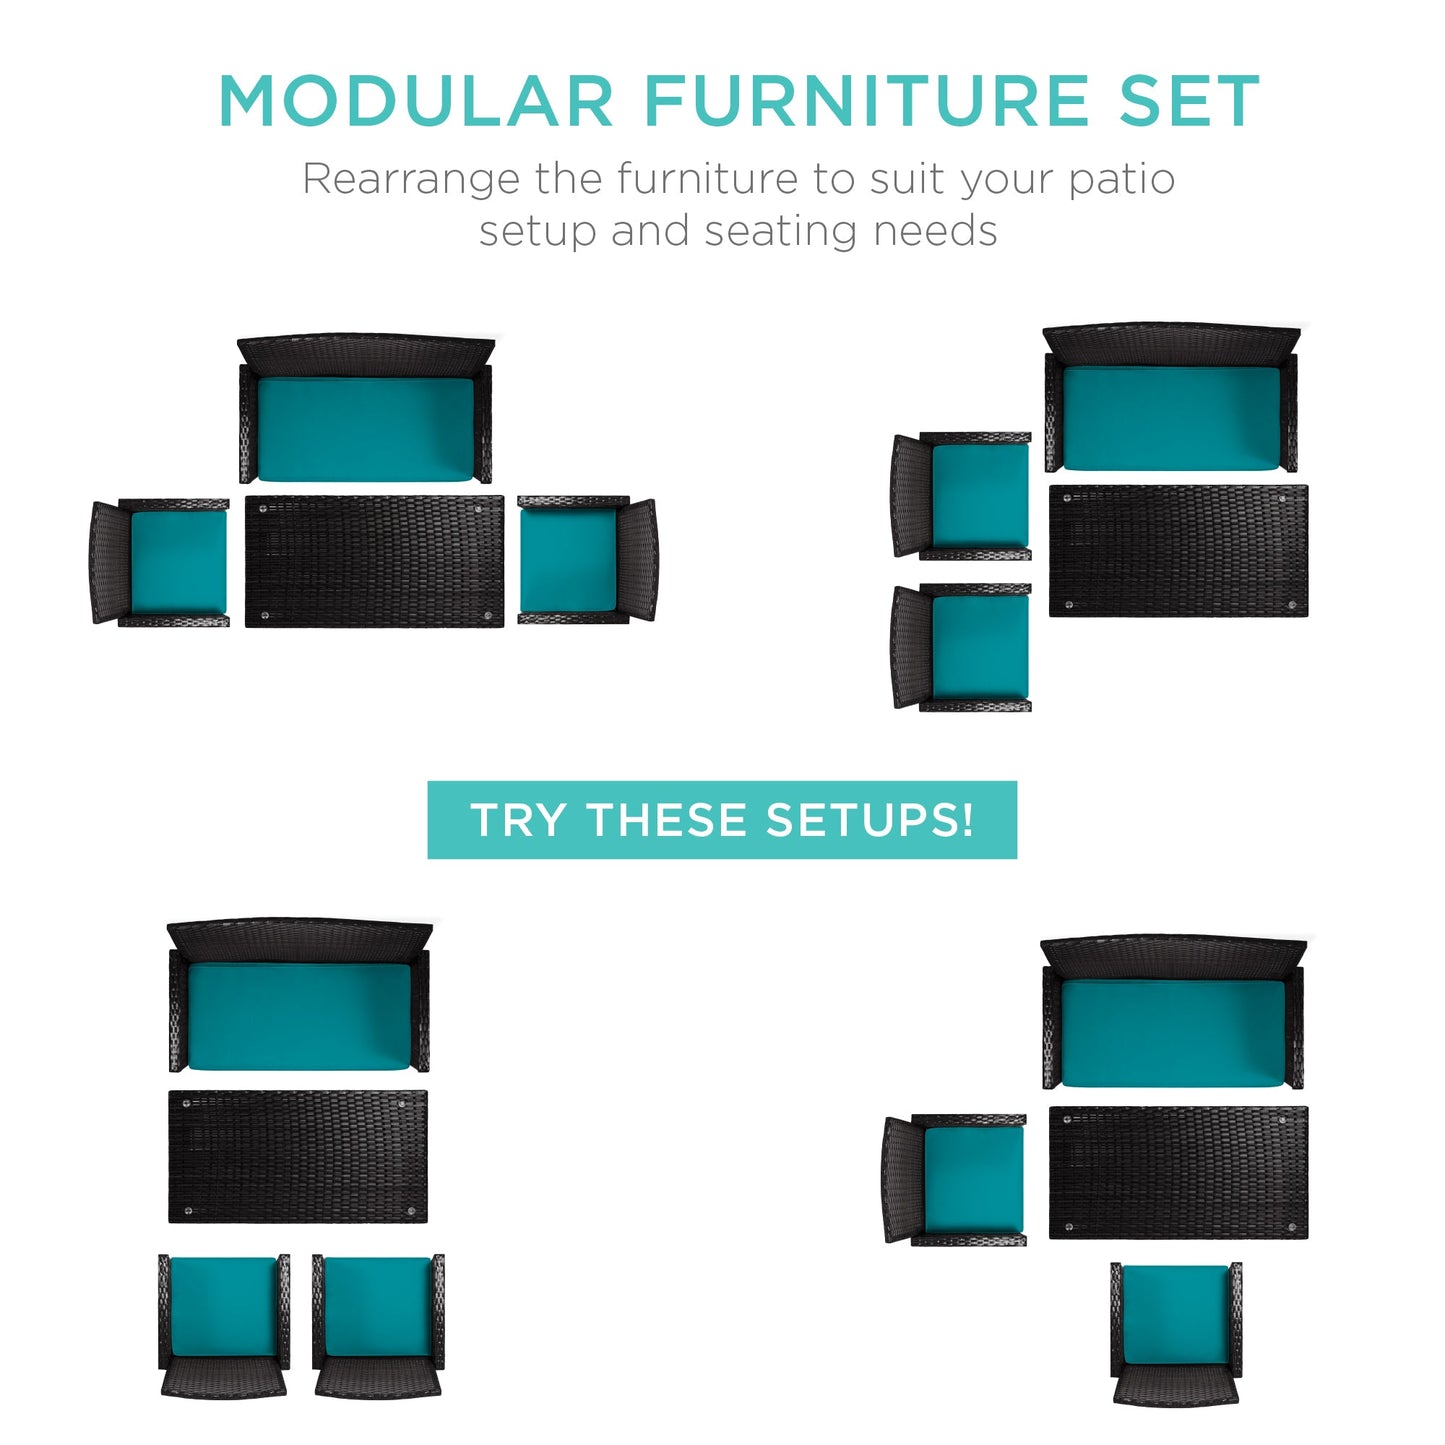 4-Piece Outdoor Wicker Conversation Patio Set w/ 4 Seats, Glass Table Top